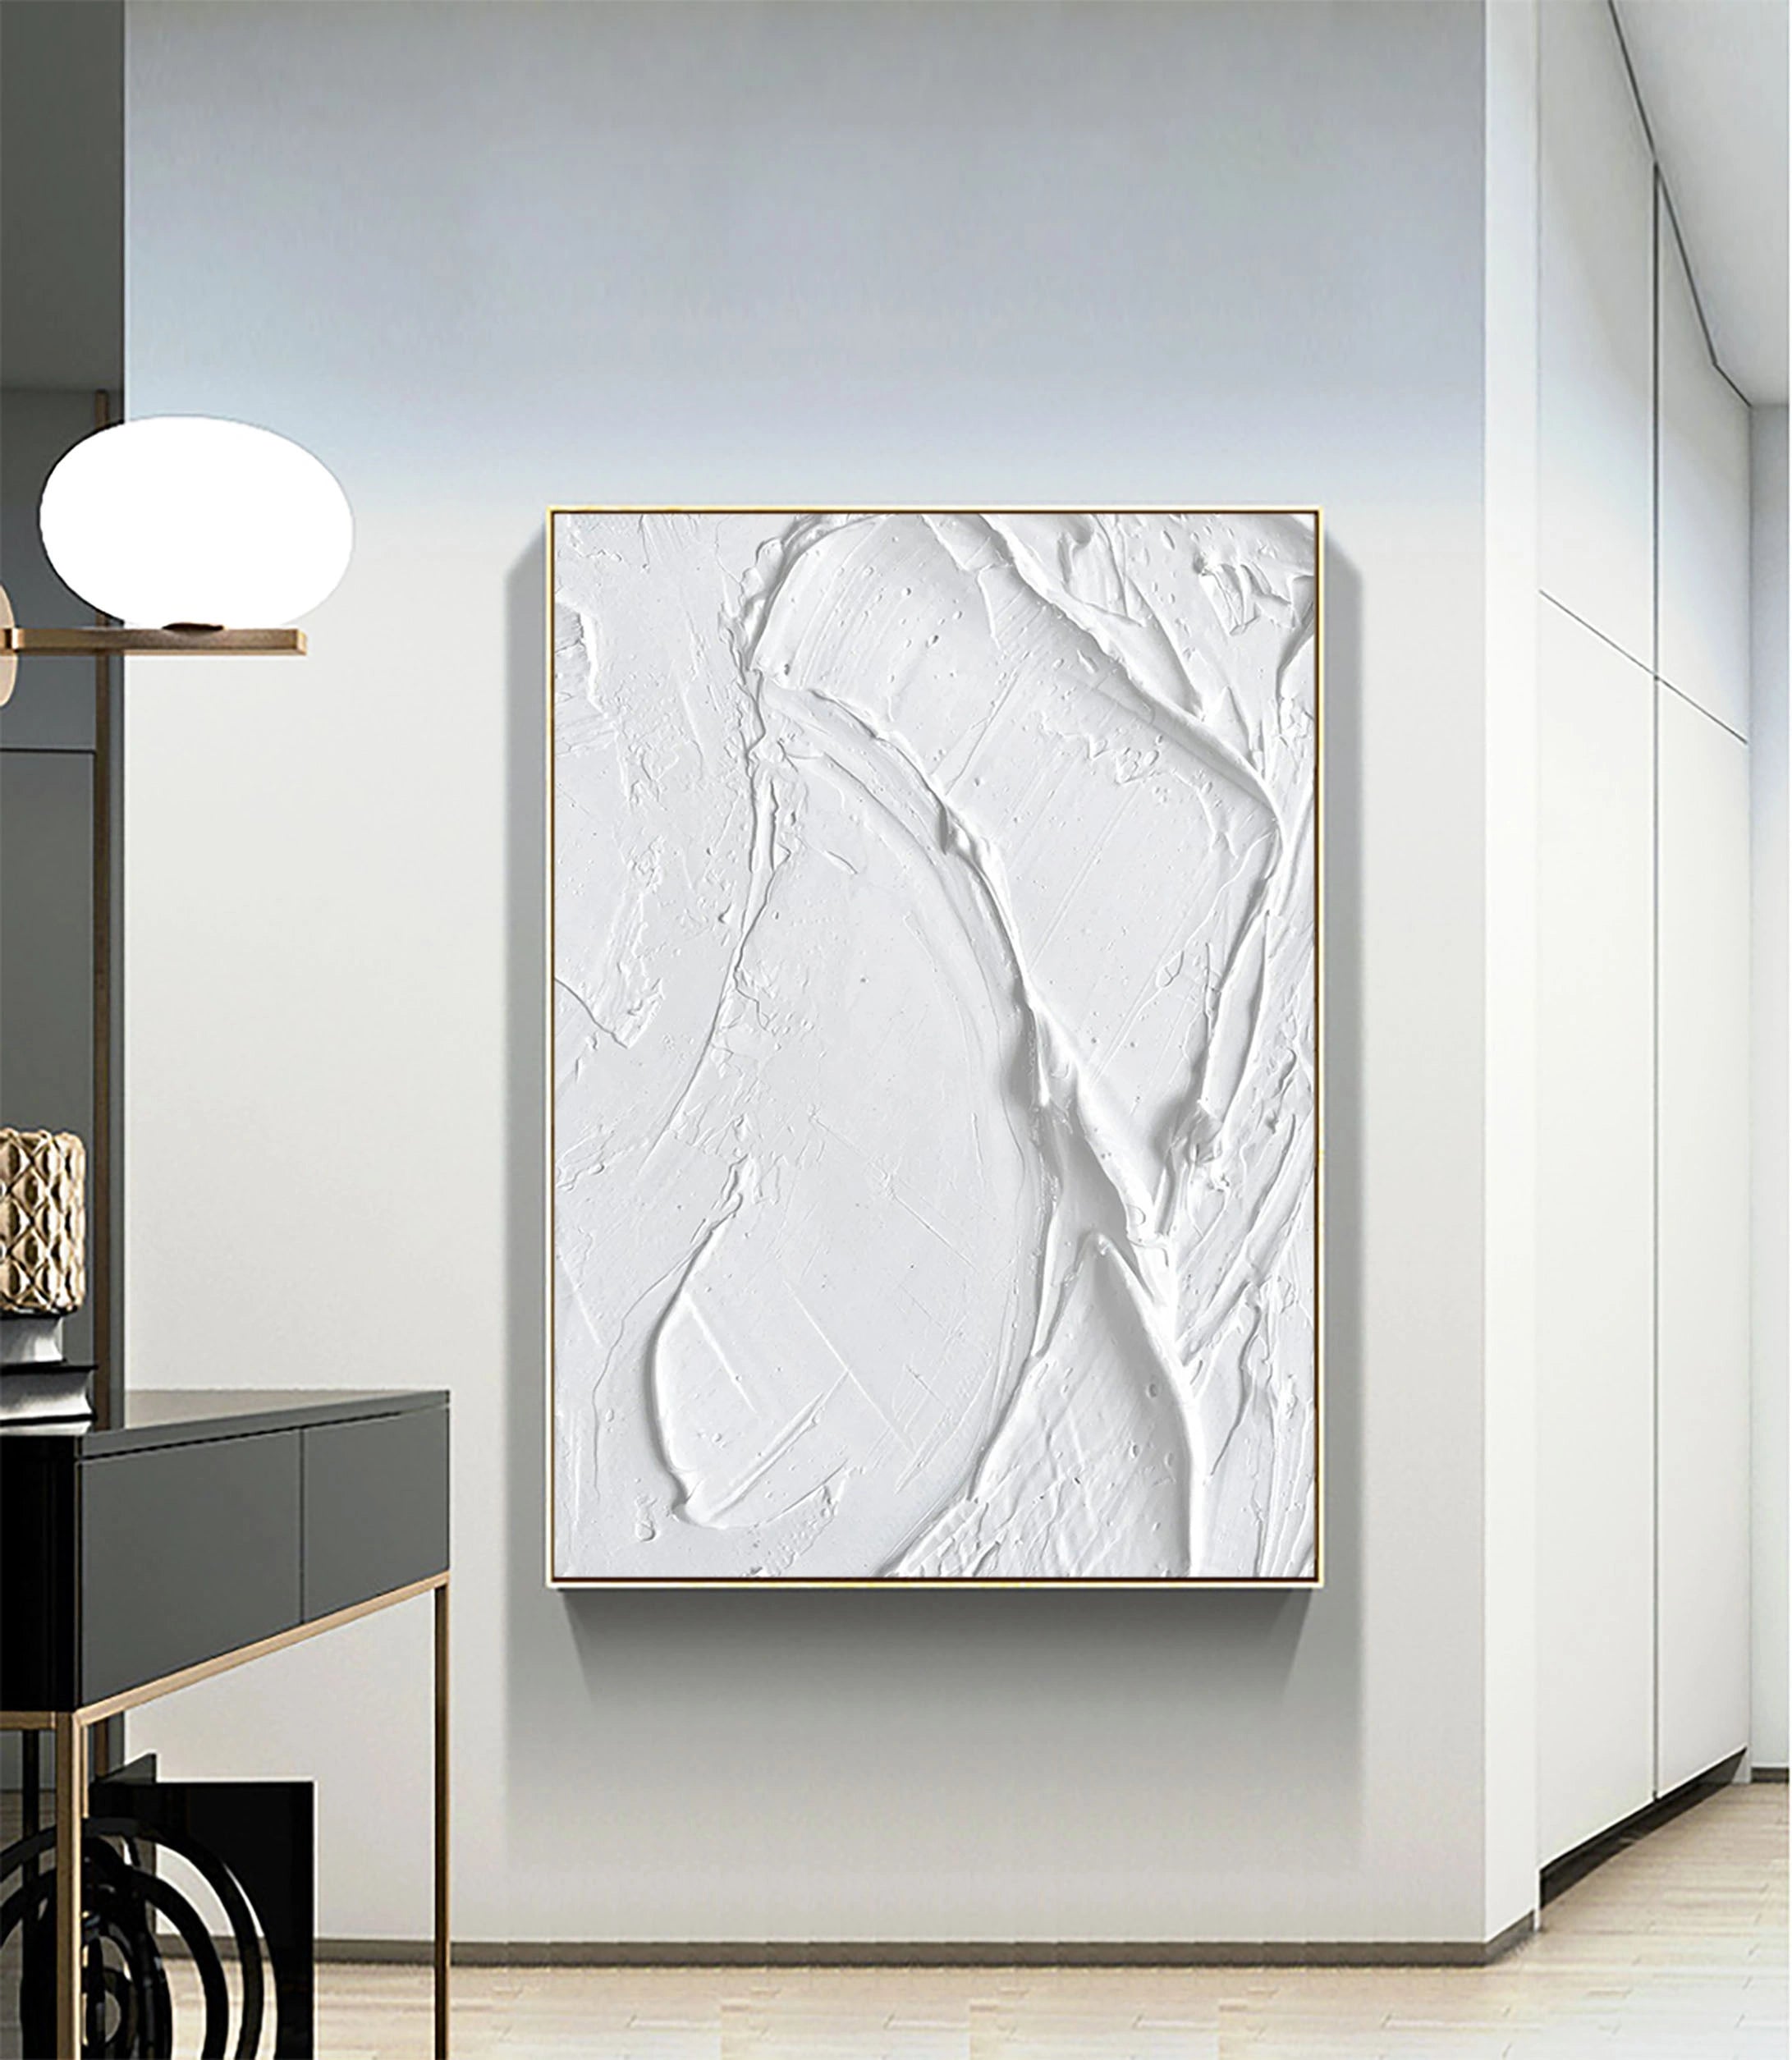 White 3D Textured Plaster Art Painting on Canvas Minimalist Room Decor